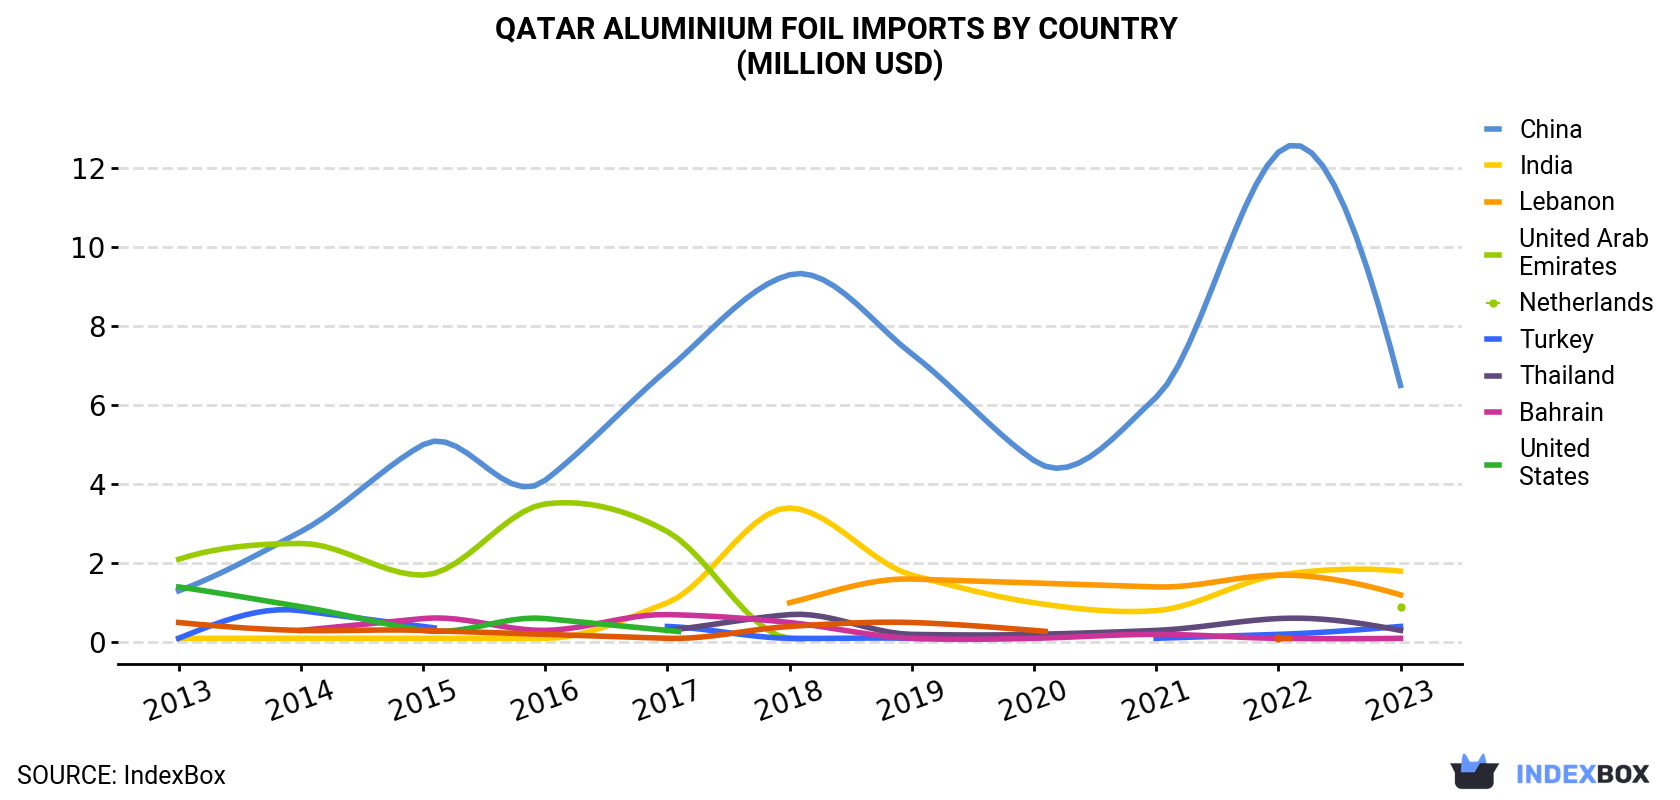 Qatar Aluminium Foil Imports By Country (Million USD)